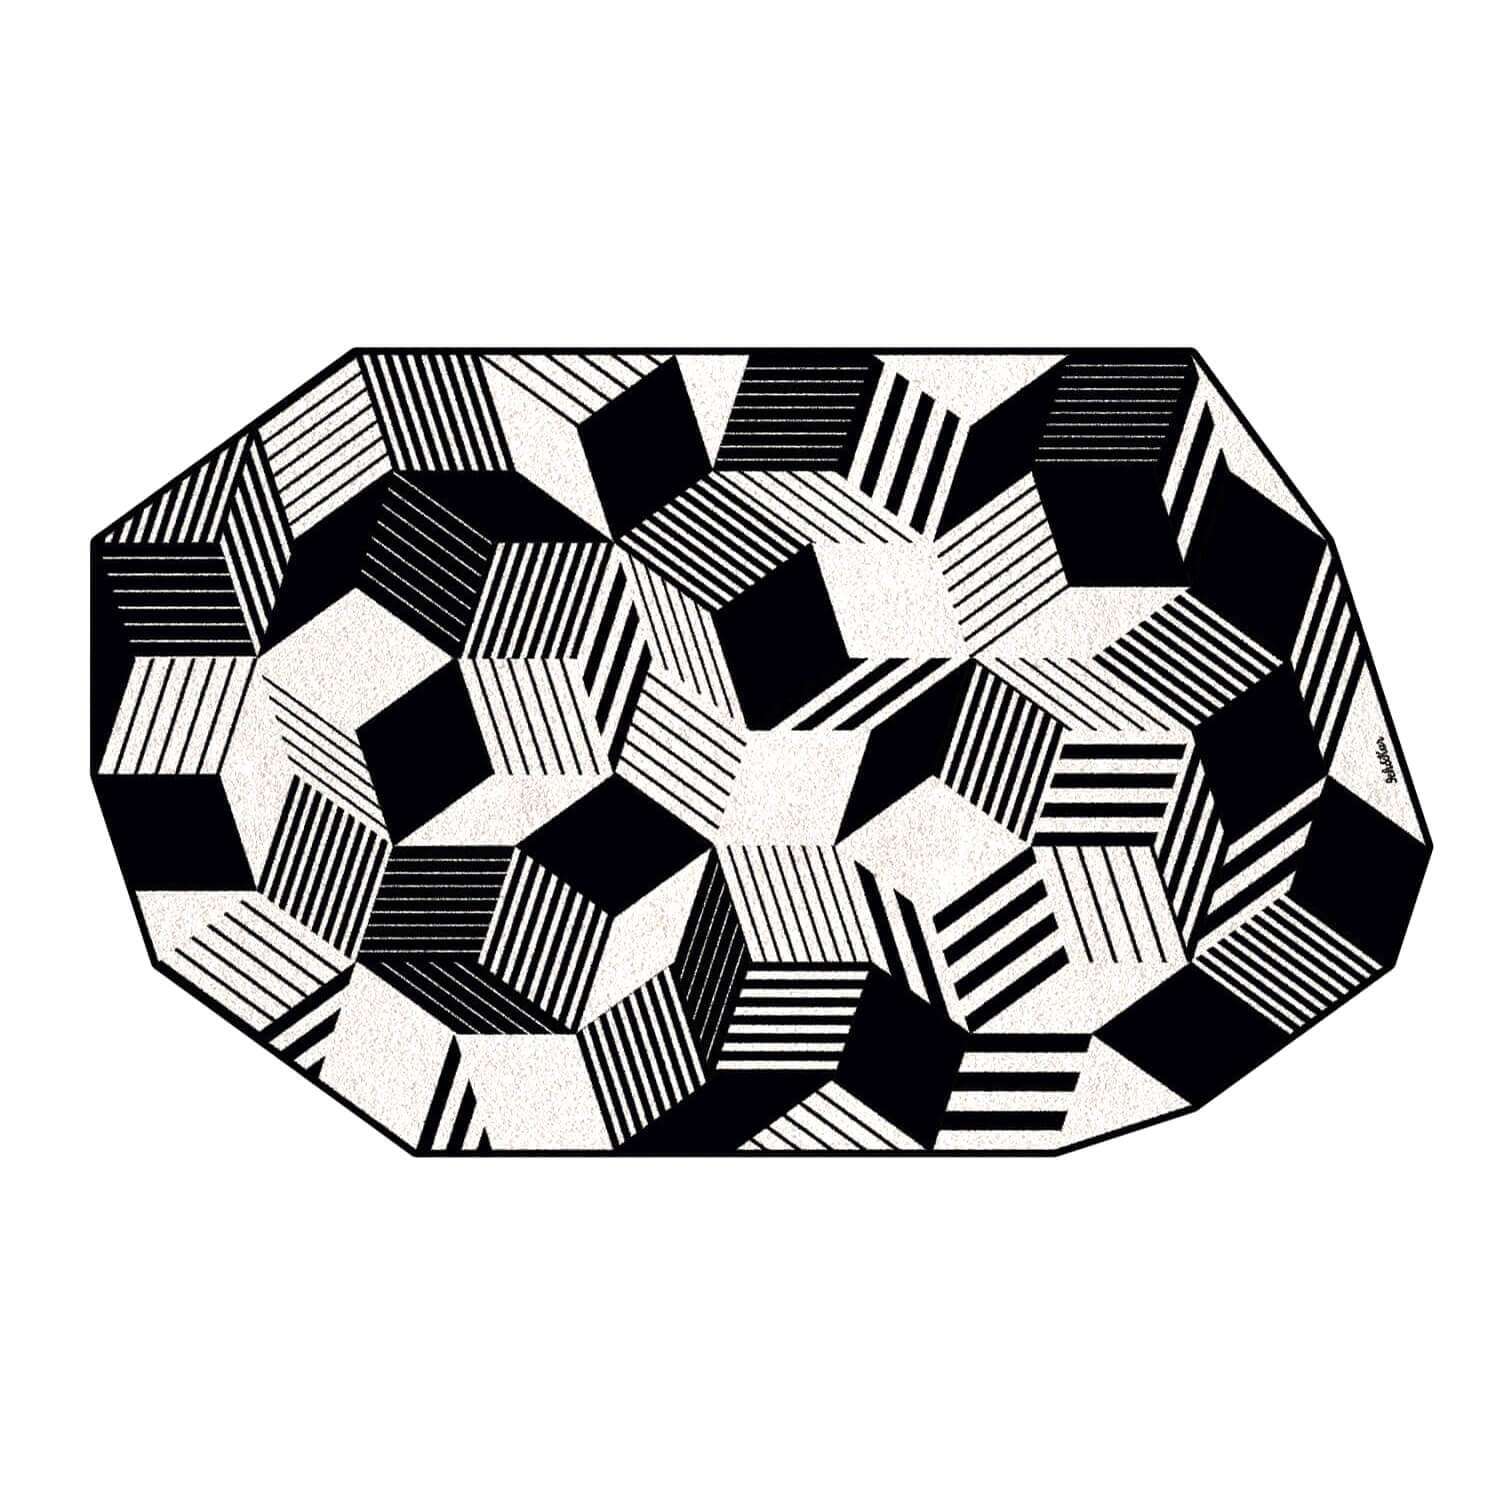 Tapis Penrose stripes black and white, fabrication française, Design IchetKar édition Bazartherapy